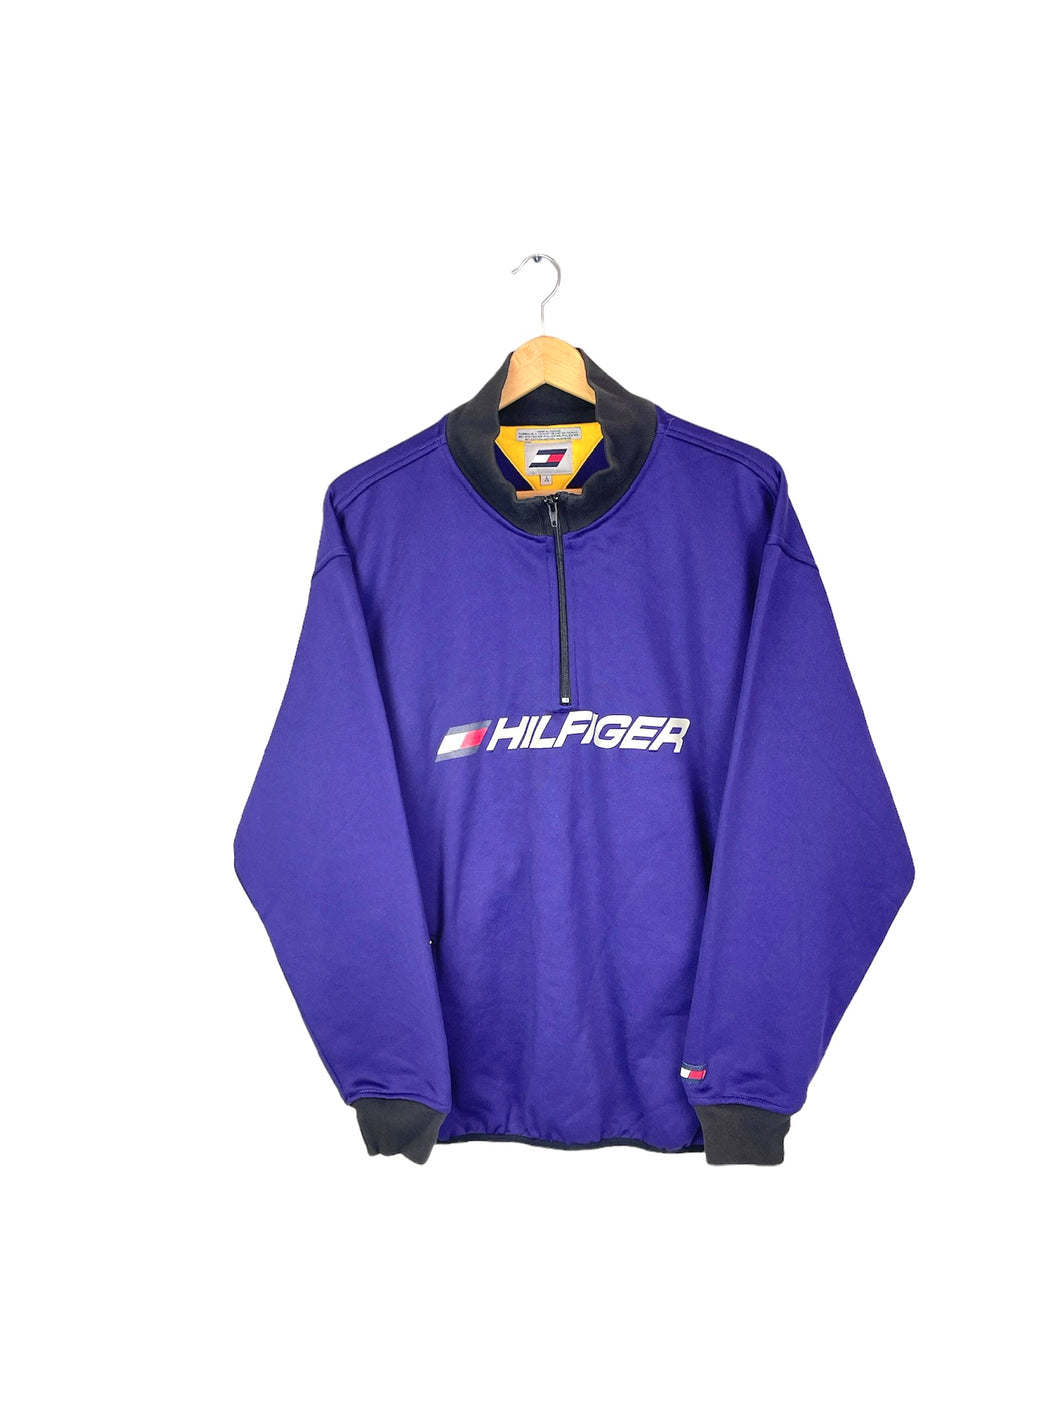 Tommy Hilfiger 1/2 Zip Sweatshirt - Large